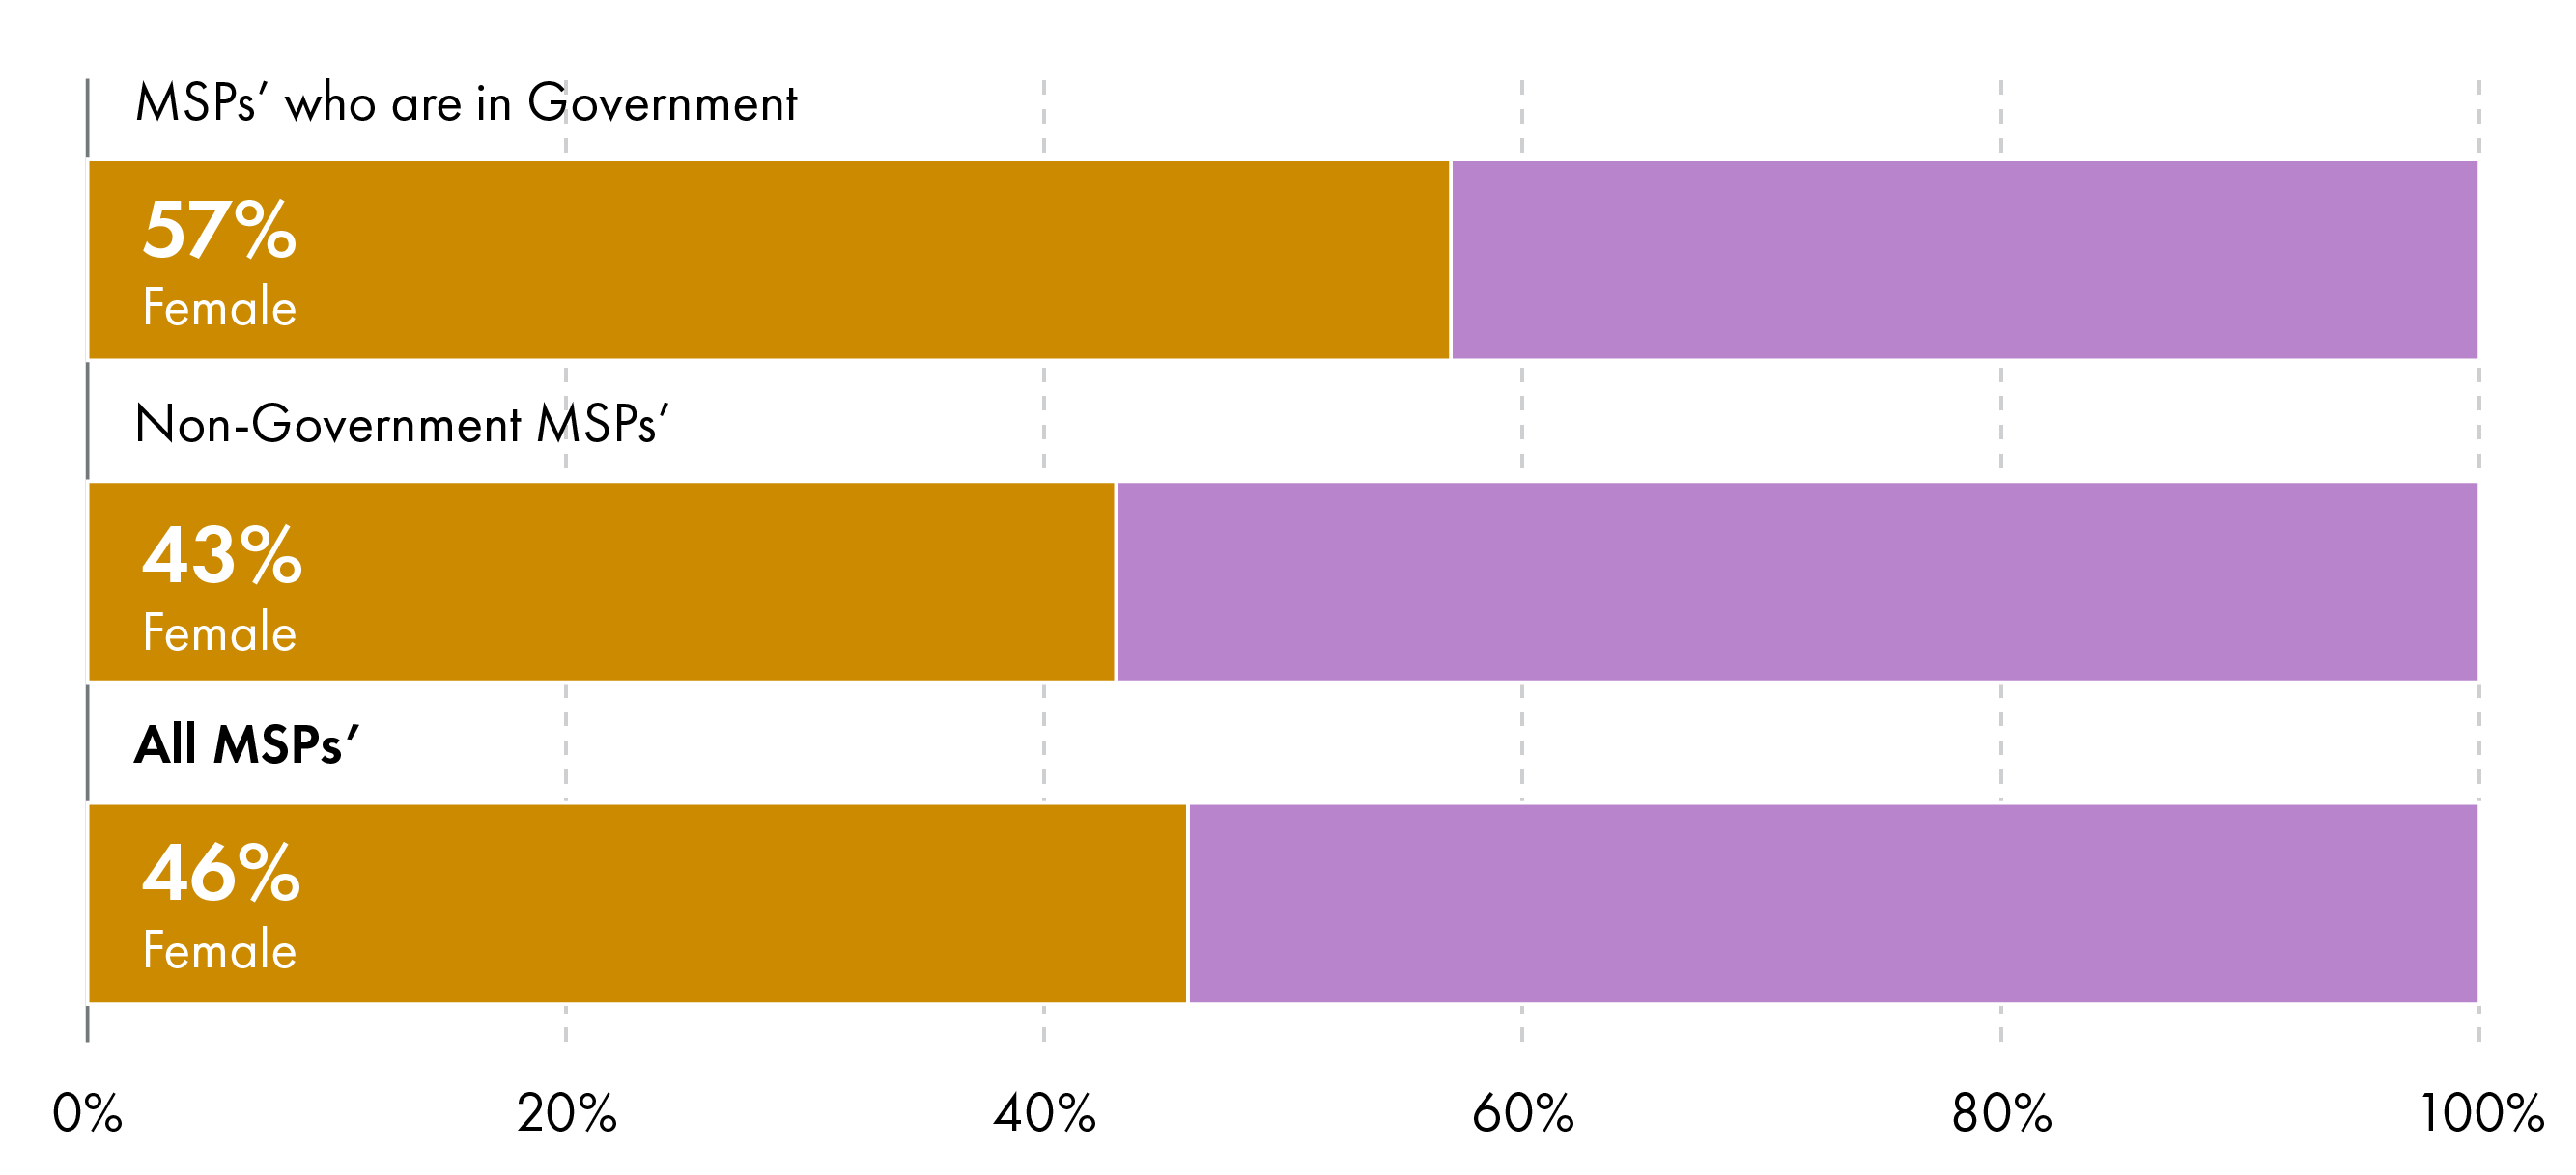 MSPs who are in Government - 57% Female, Non-Government MSP's - 43% Female, All MSPs - 46% Female